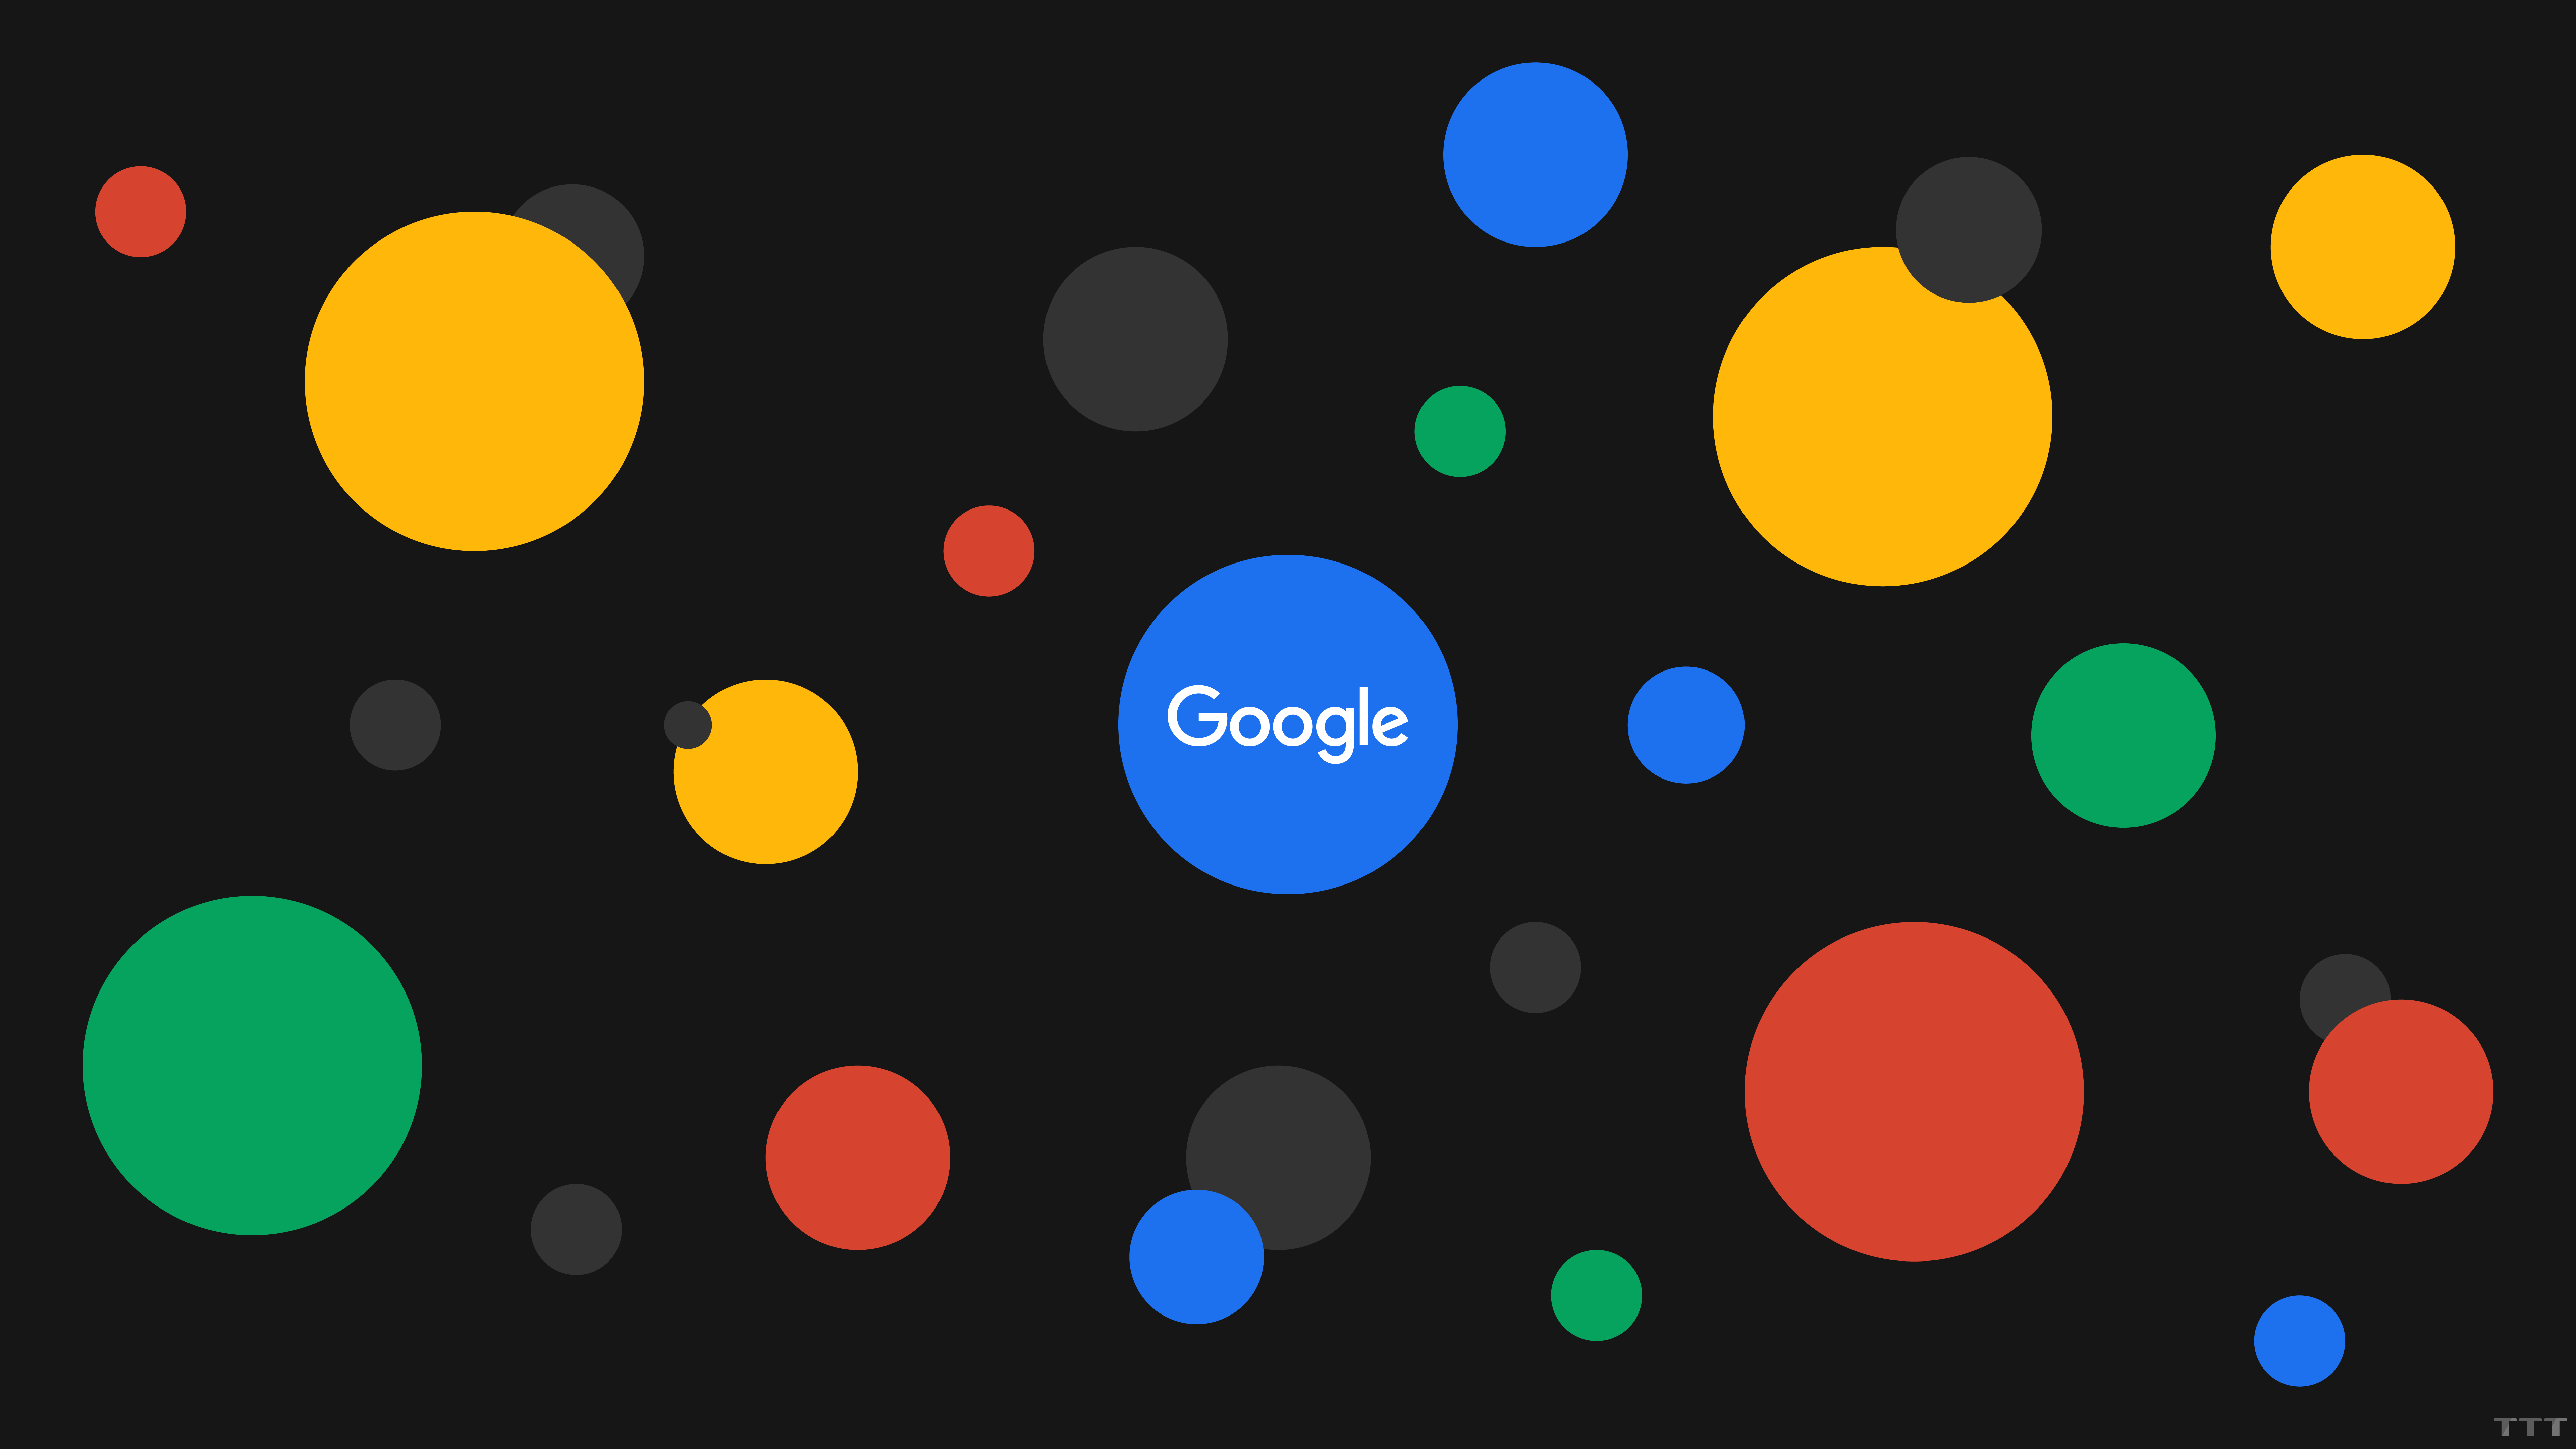 Free Google Wallpaper